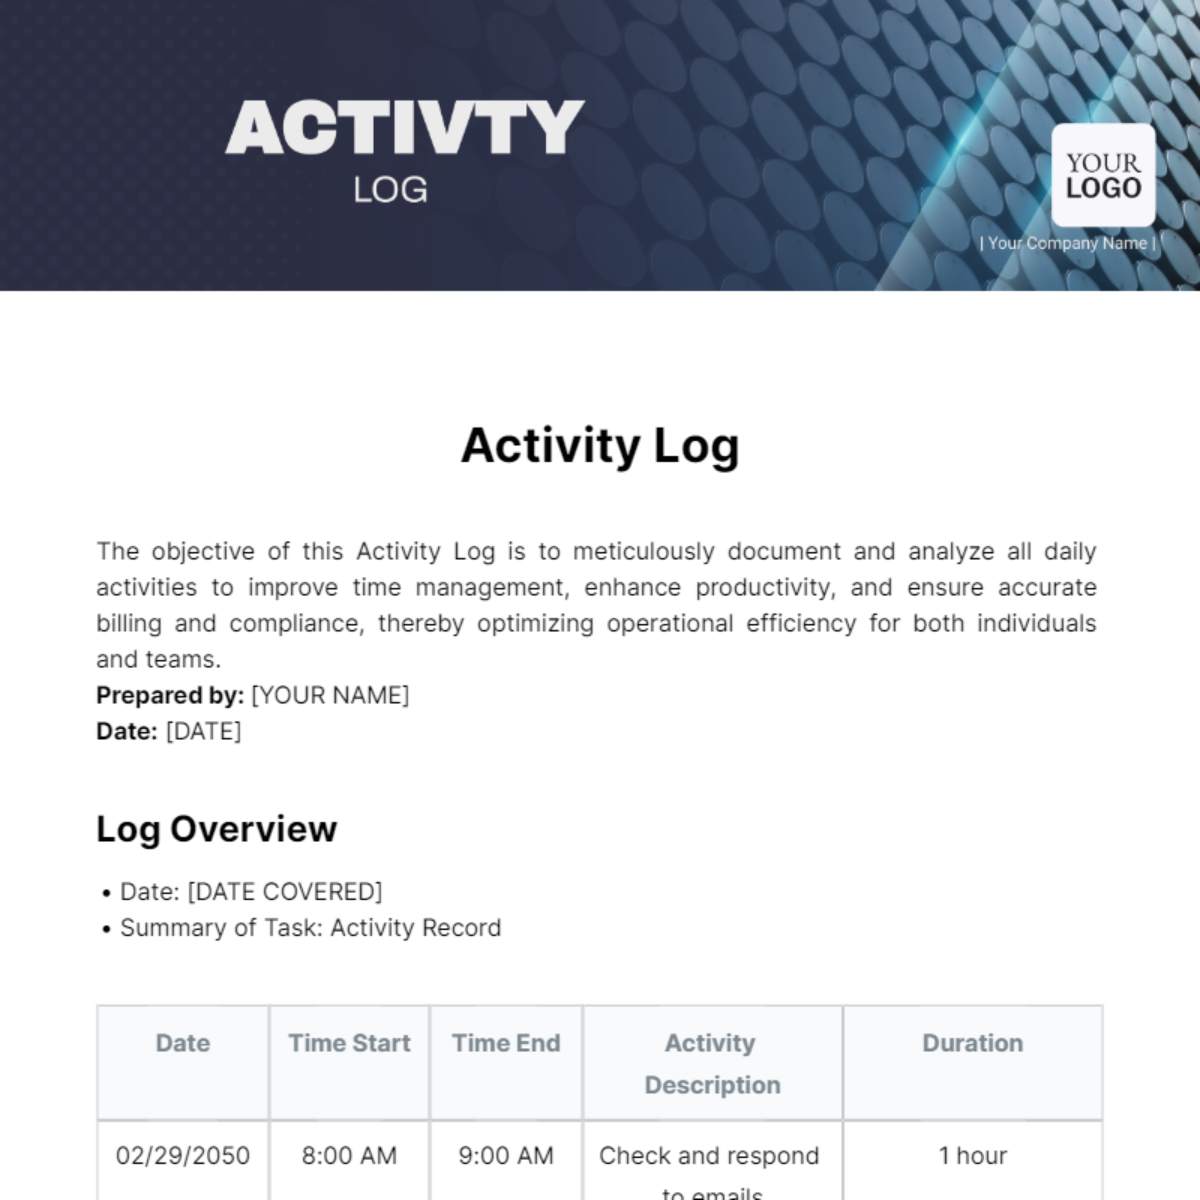 Activity Log Template